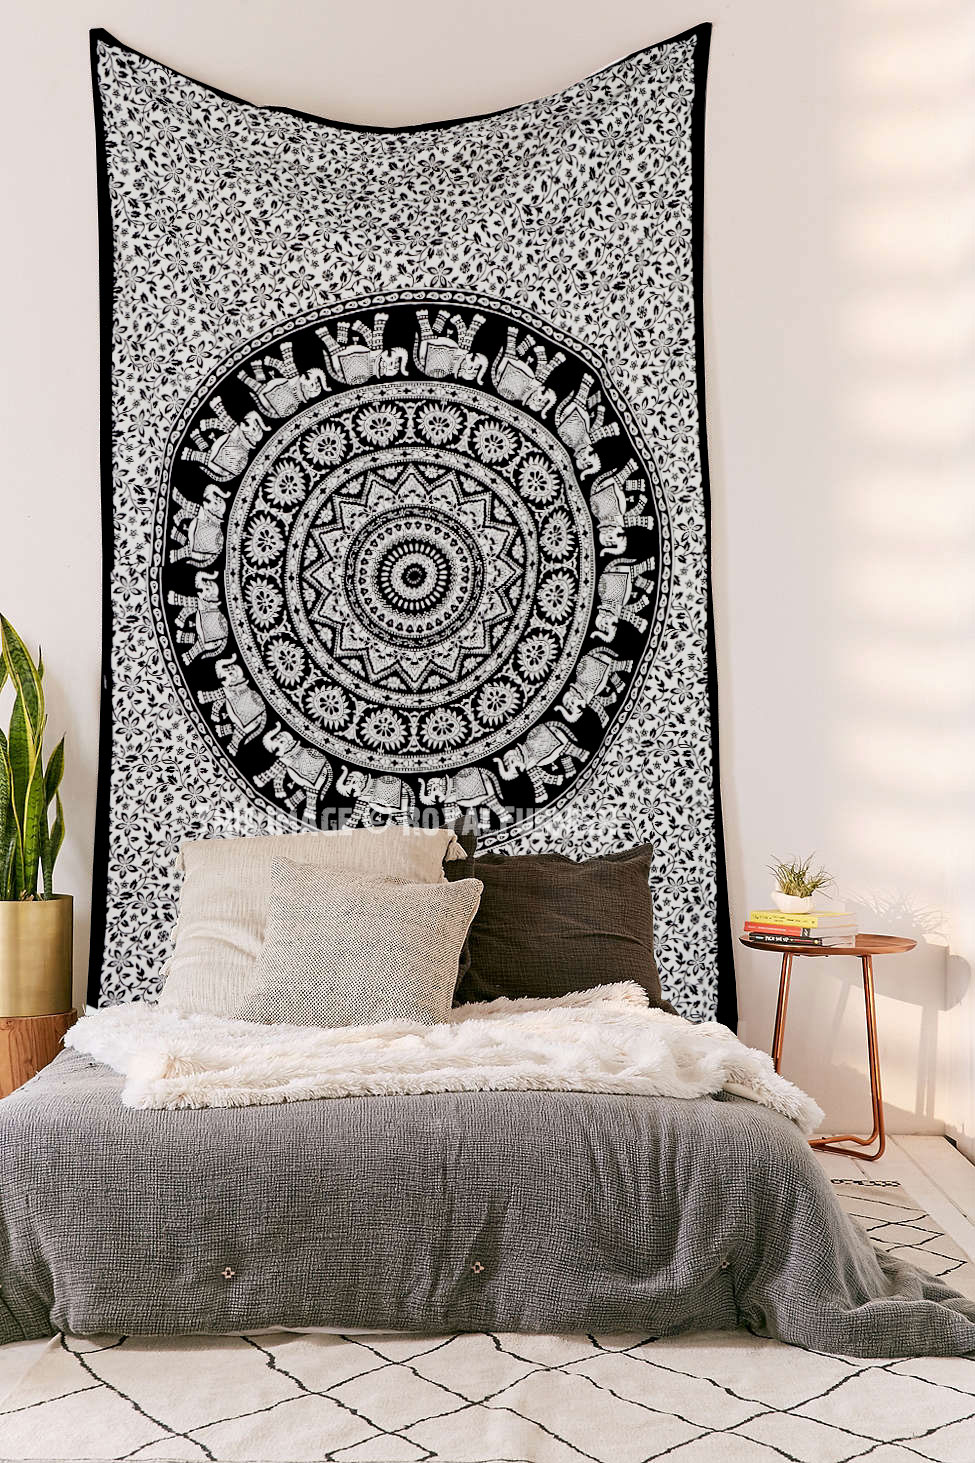 Twin Black & White Hamsa Hand Tapestry Wall Hanging Hippie Room Decorative Throw 